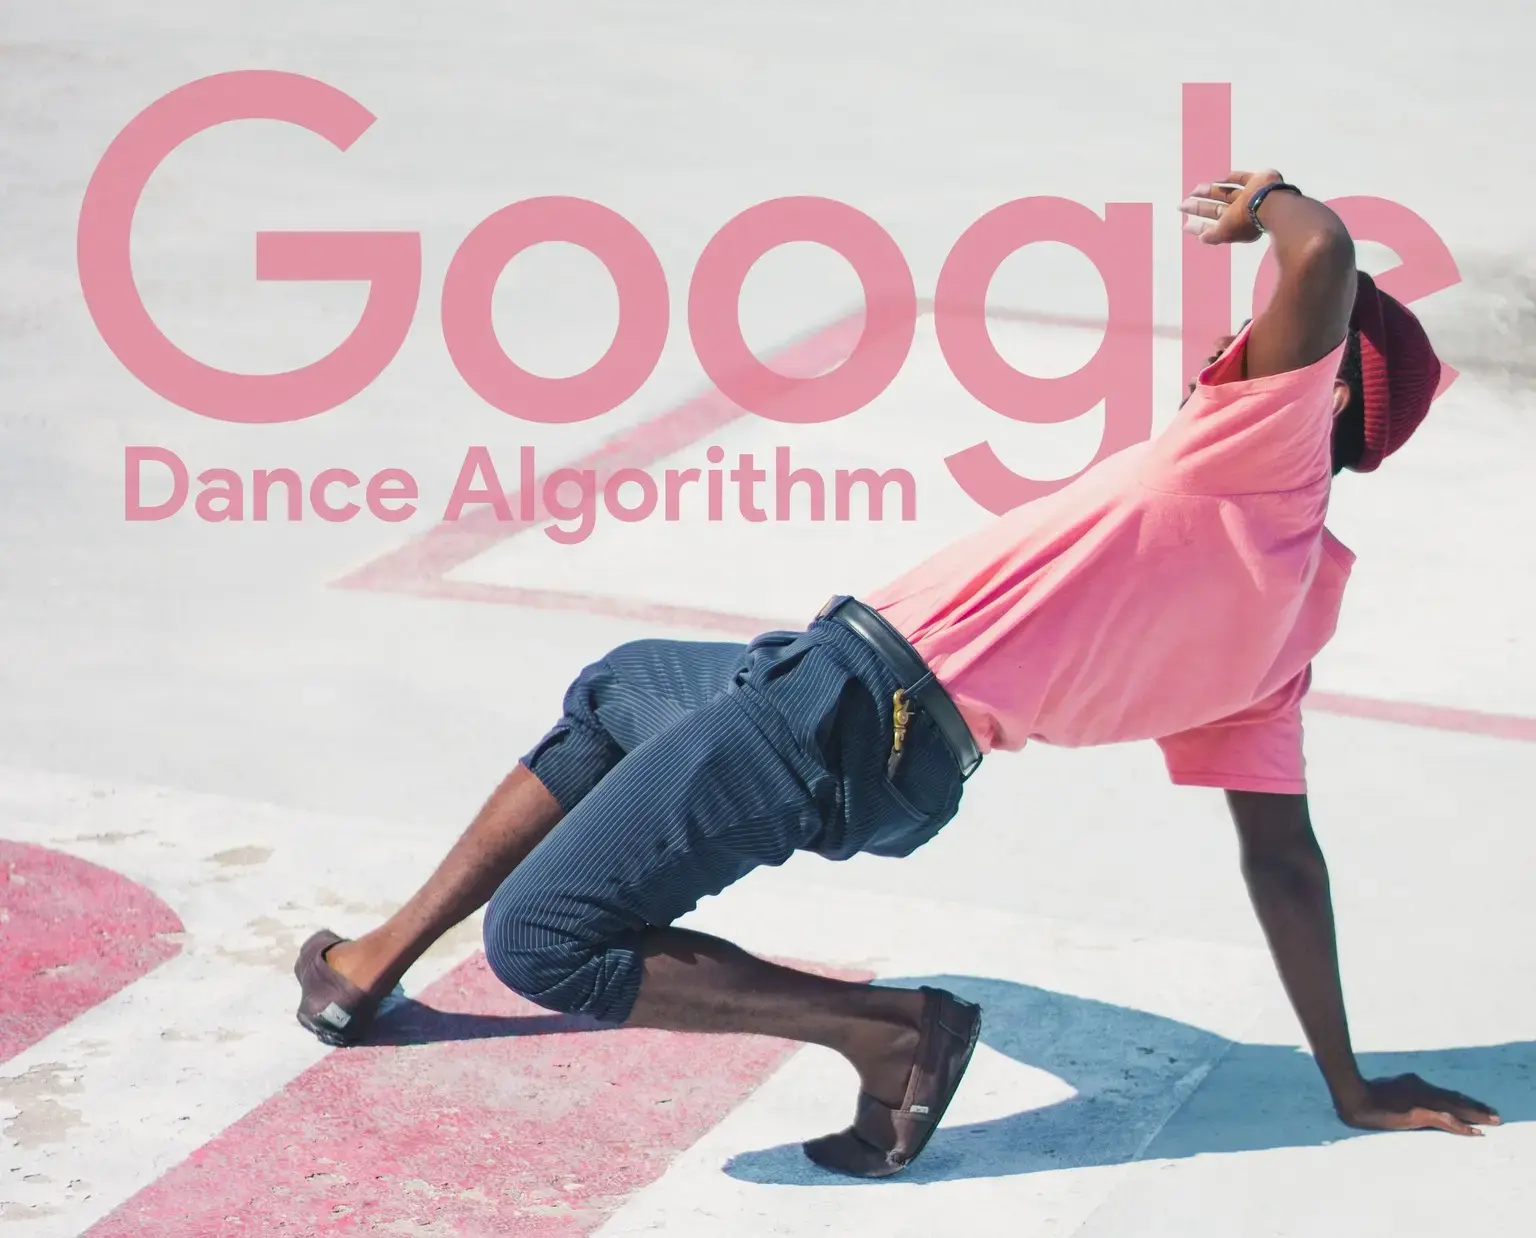 الگوریتم رقص گوگل (Google Dance Algorithm) | الگوریتم رقص گوگل دقیقا چیست؟